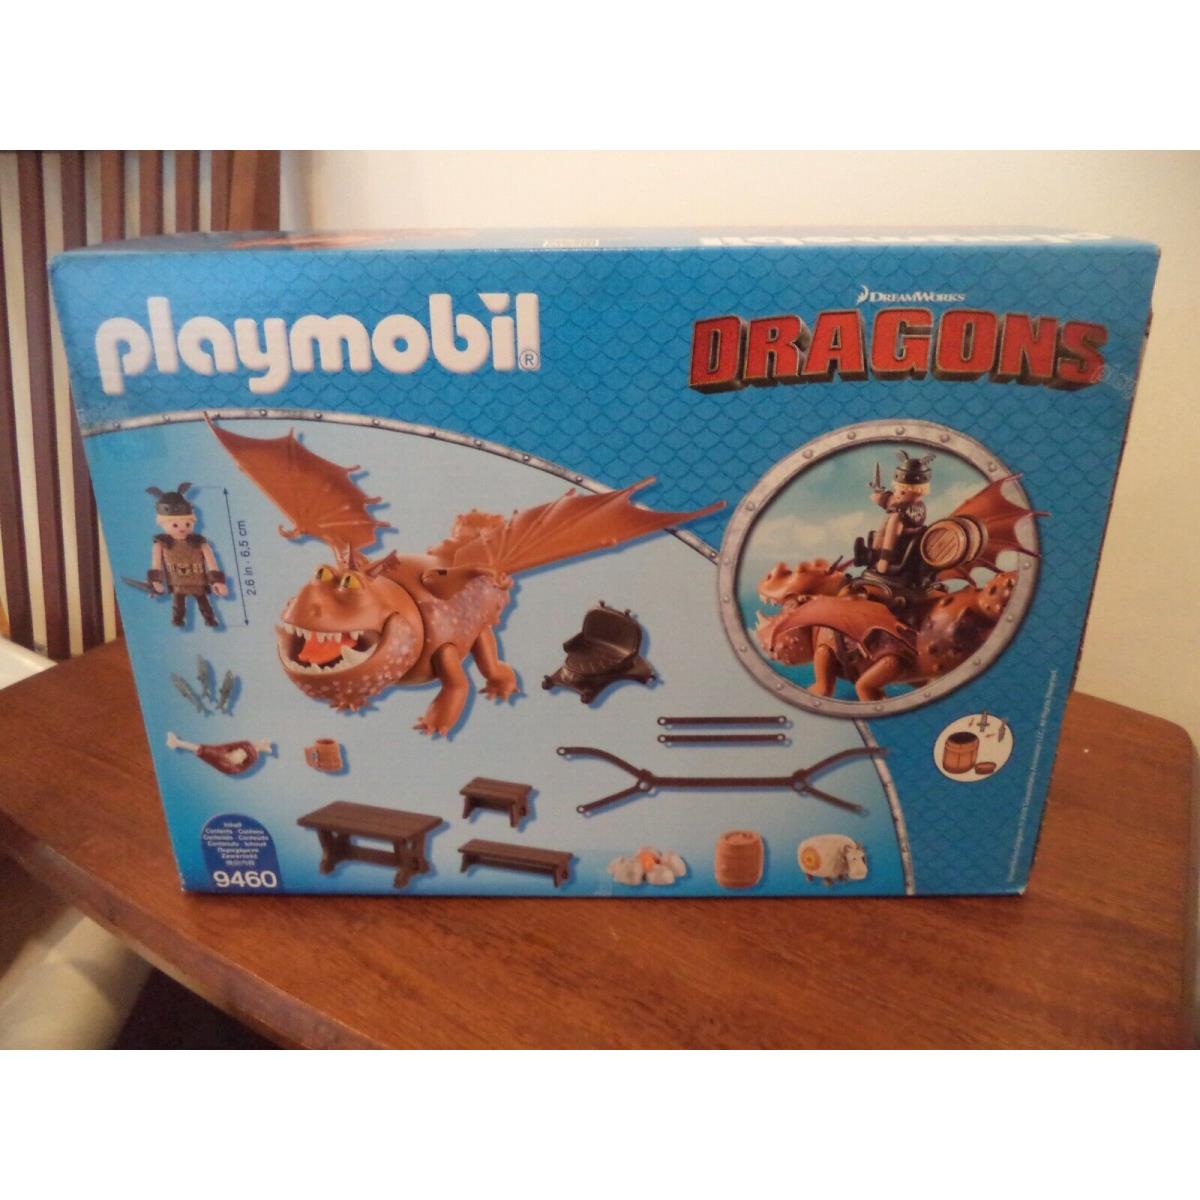 Playmobil How to Train Your Dragon Fishlegs Meatlug 9460